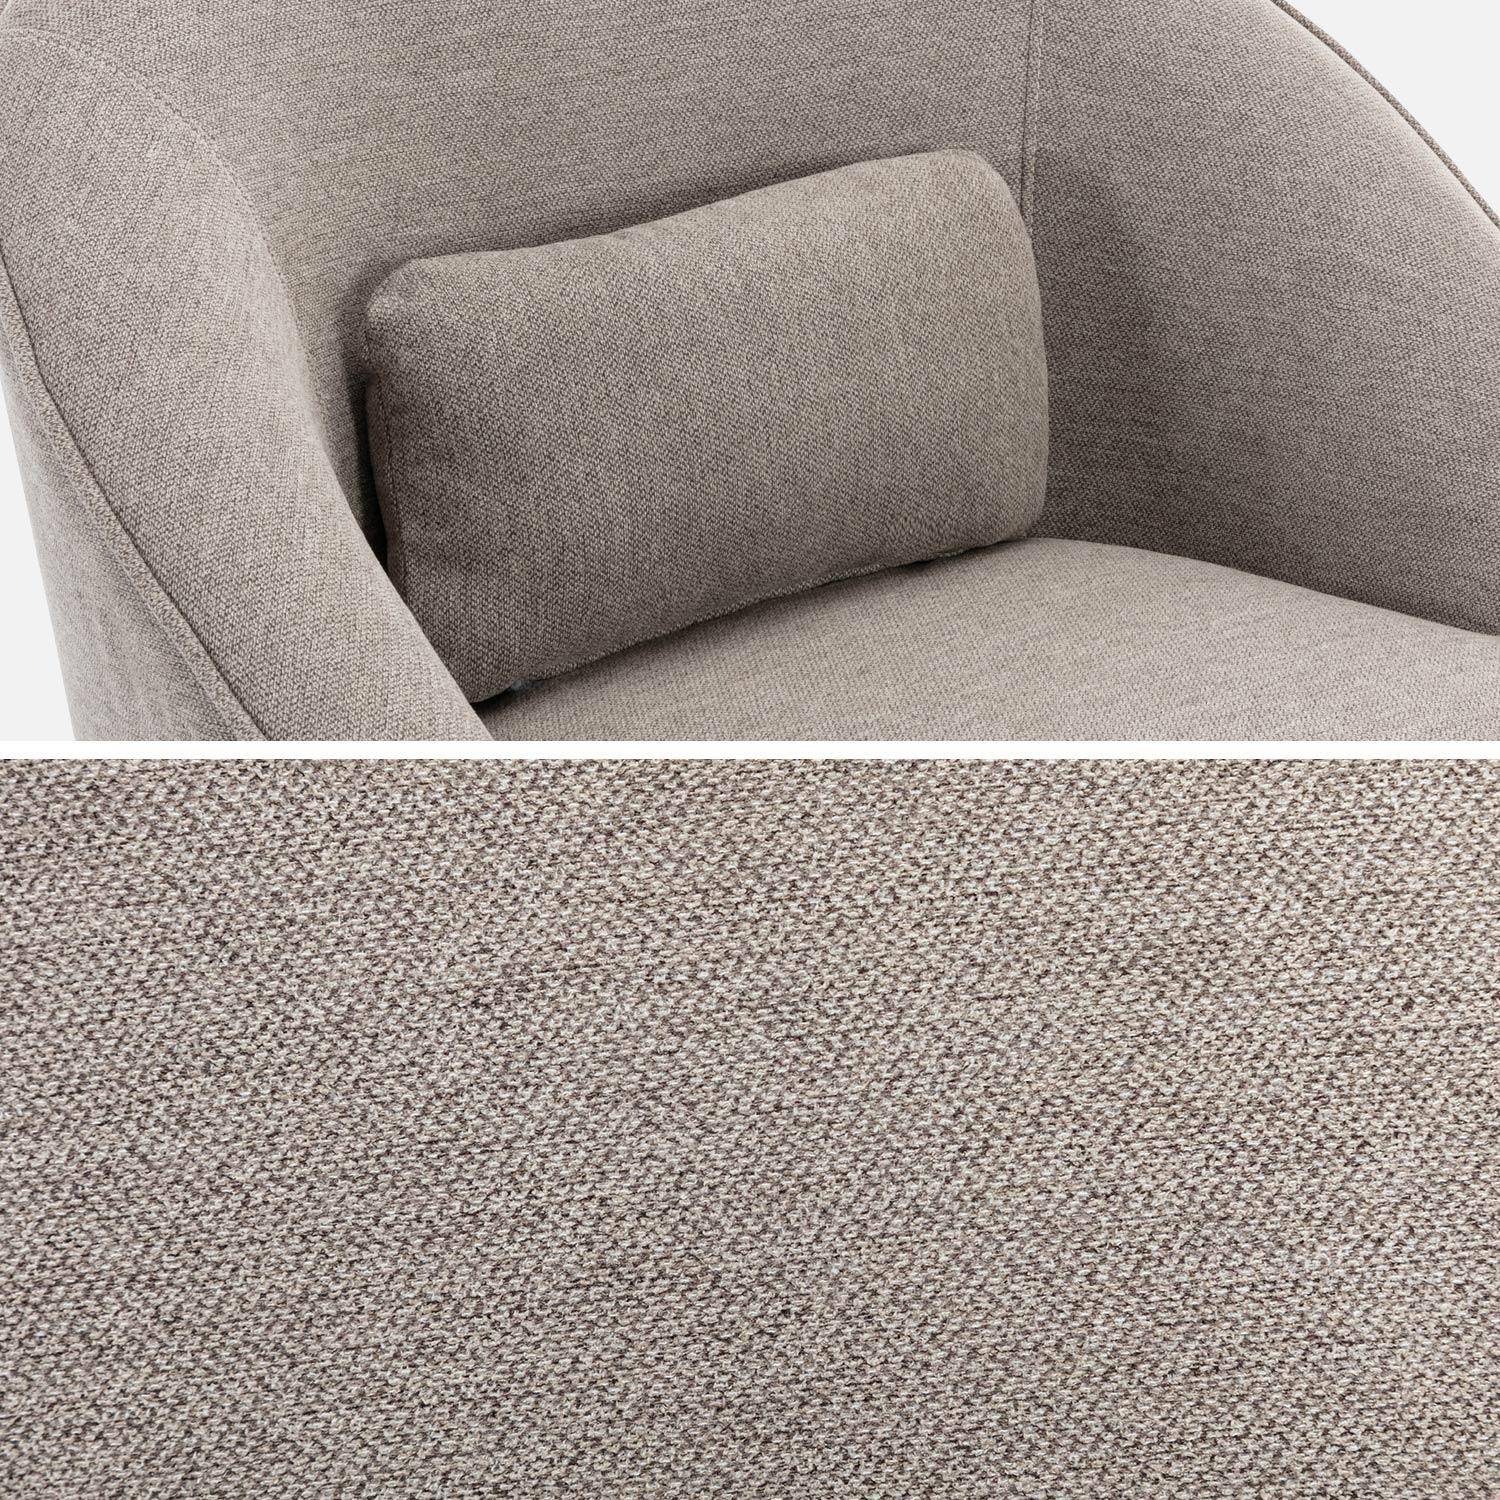 360° draaibare fauteuil, Lana, in taupe stof, met kussen B 80 x D 73 x H 77cm Photo8